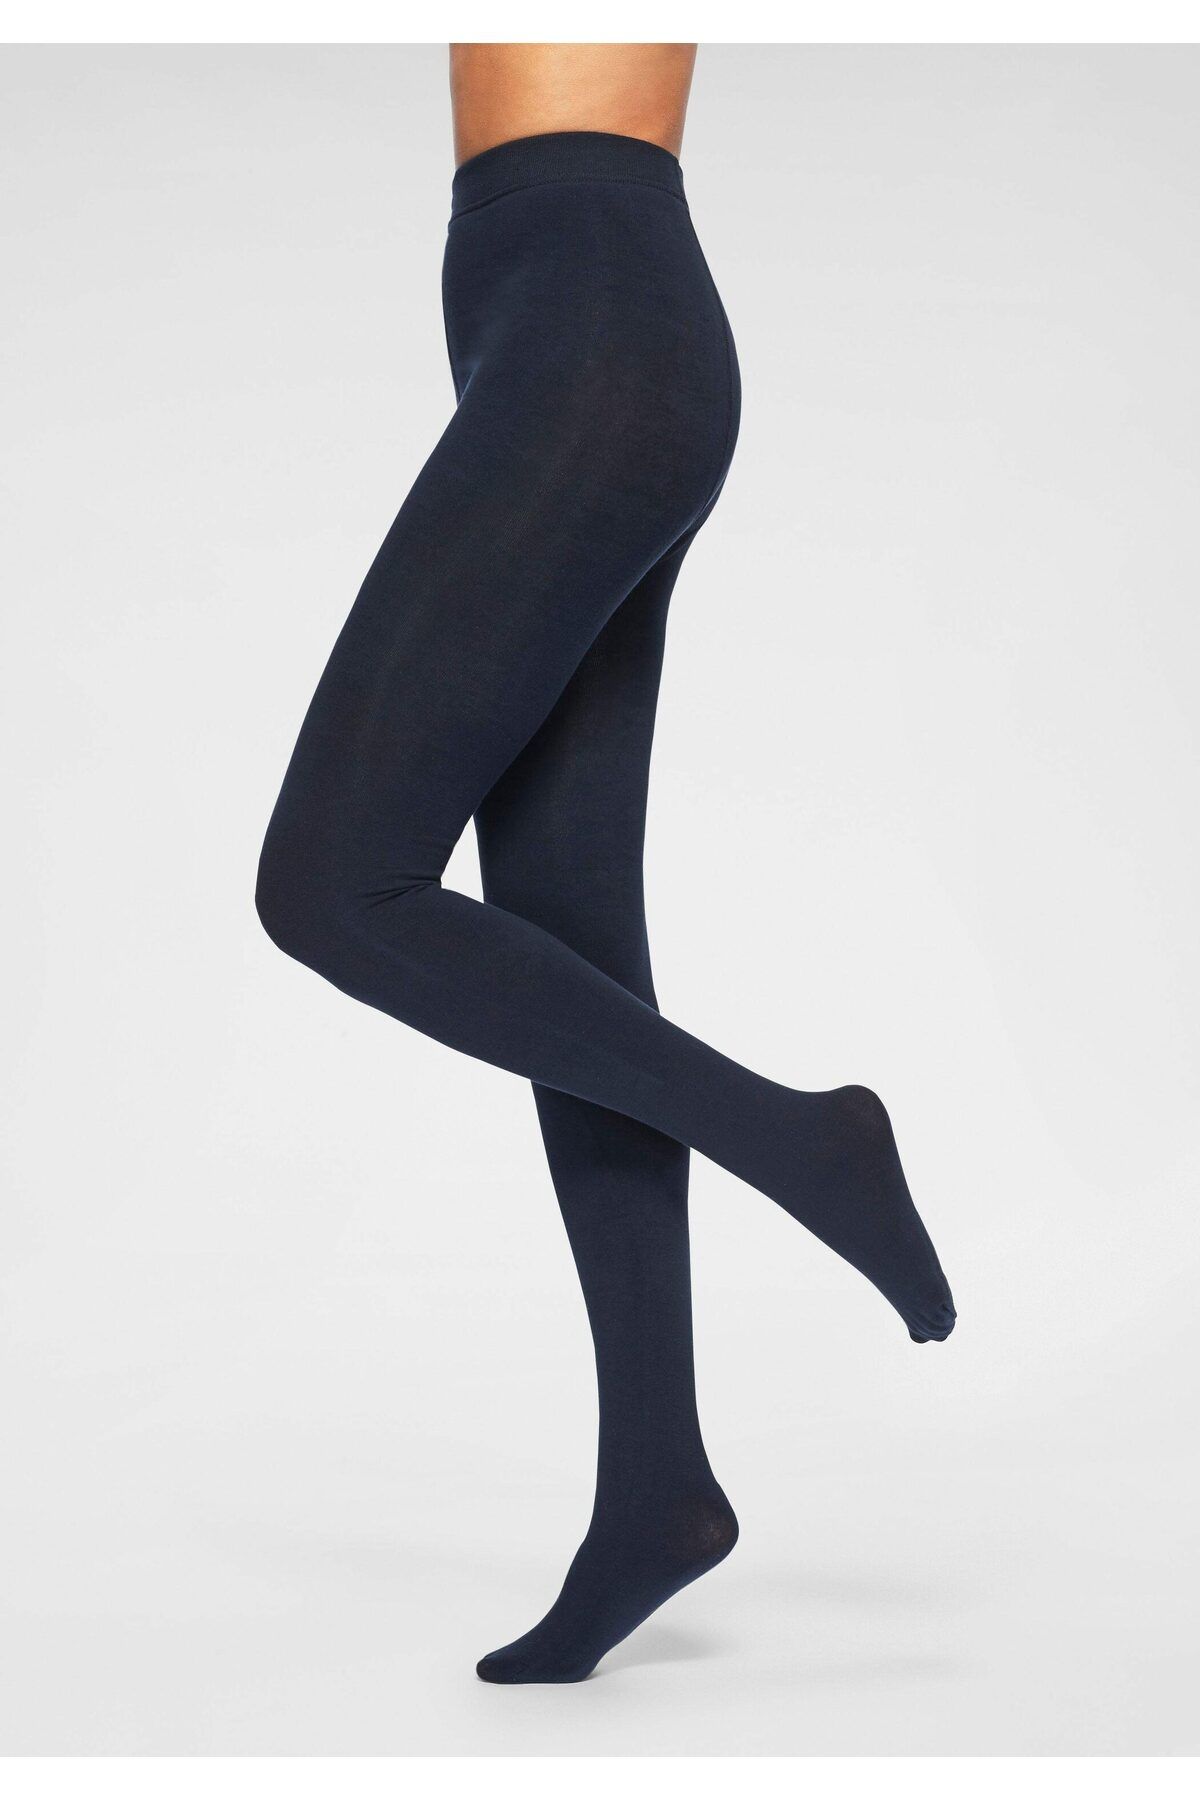 LAVANA Socken - basic - Trendyol Unifarben - Blau